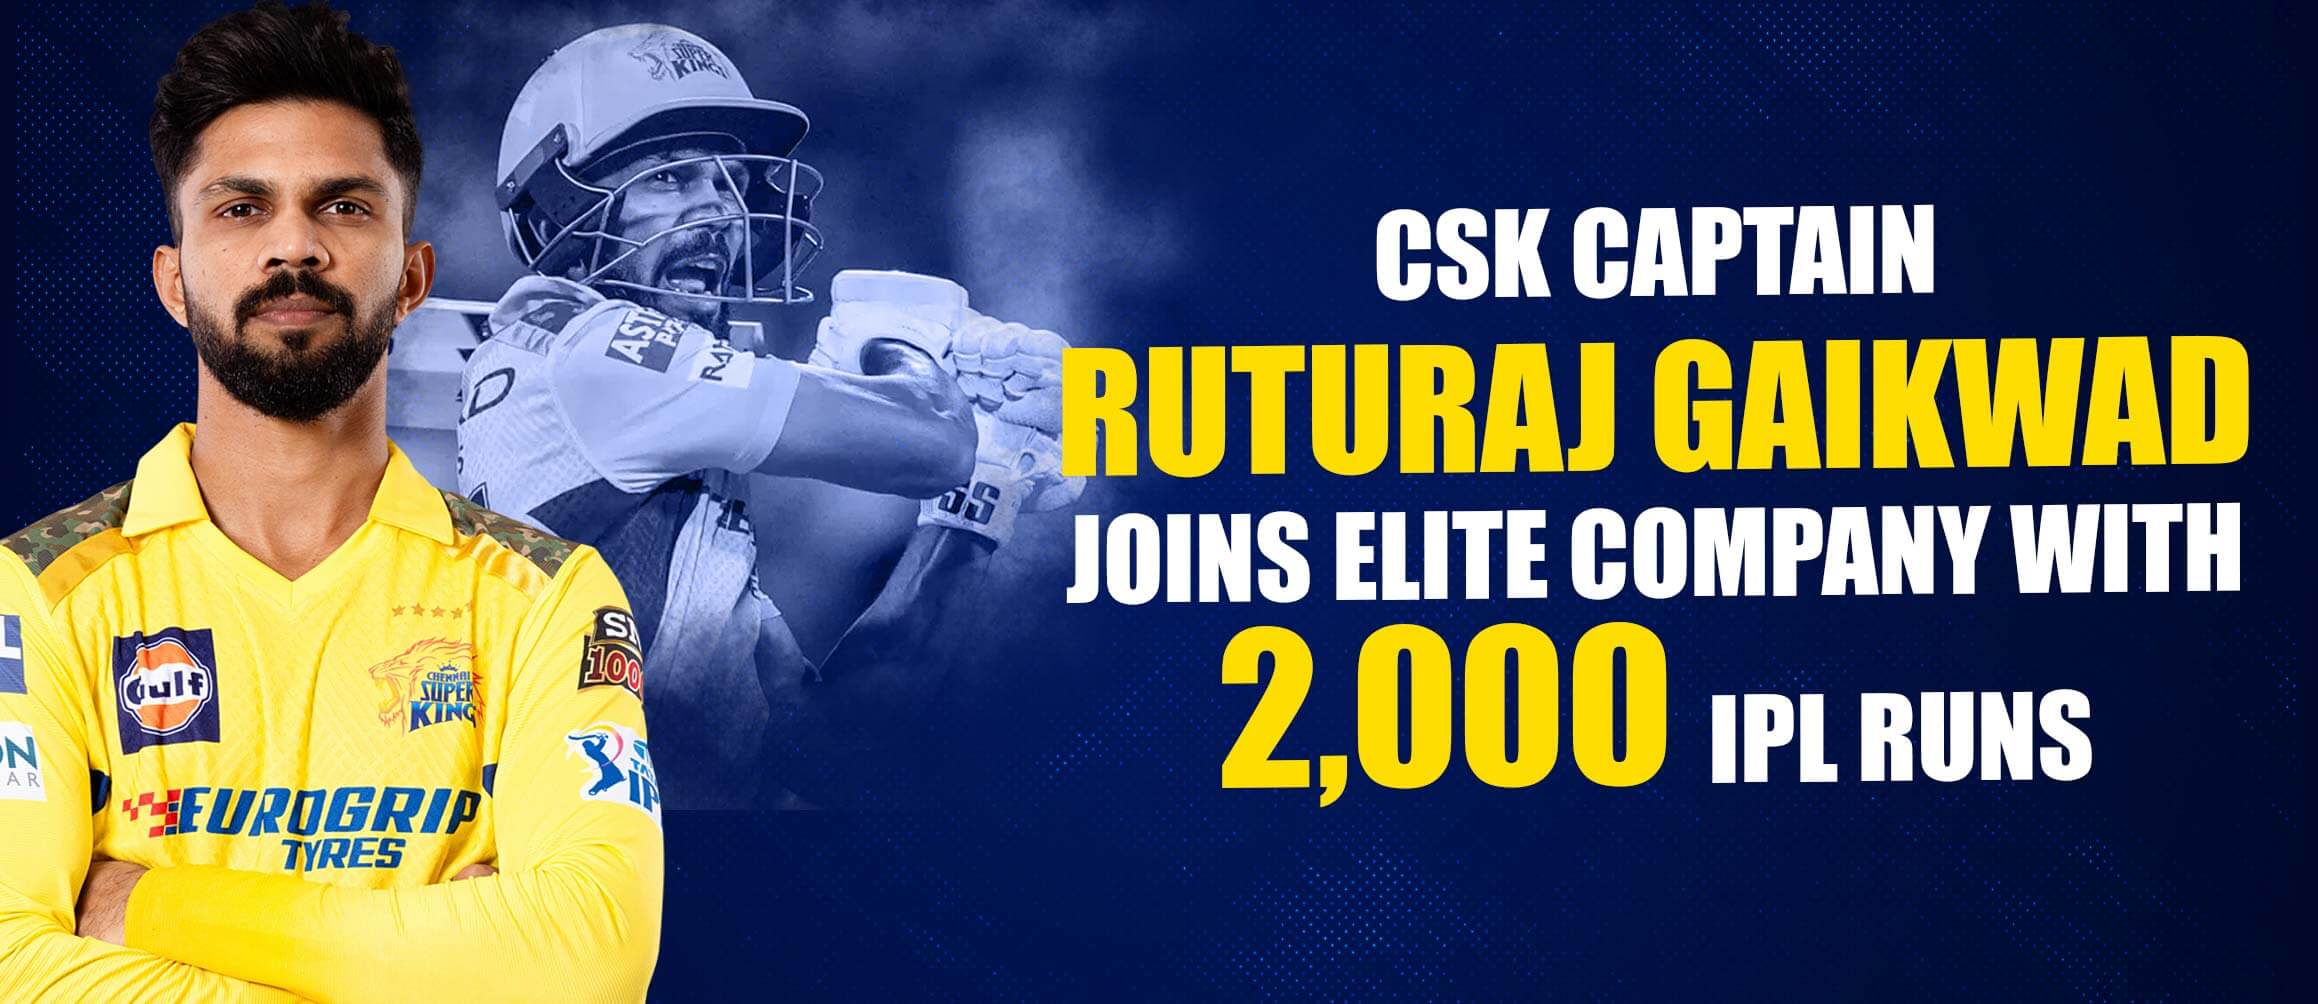 CSK Captain Ruturaj Gaikwad Joins Elite Company with 2,000 IPL Runs